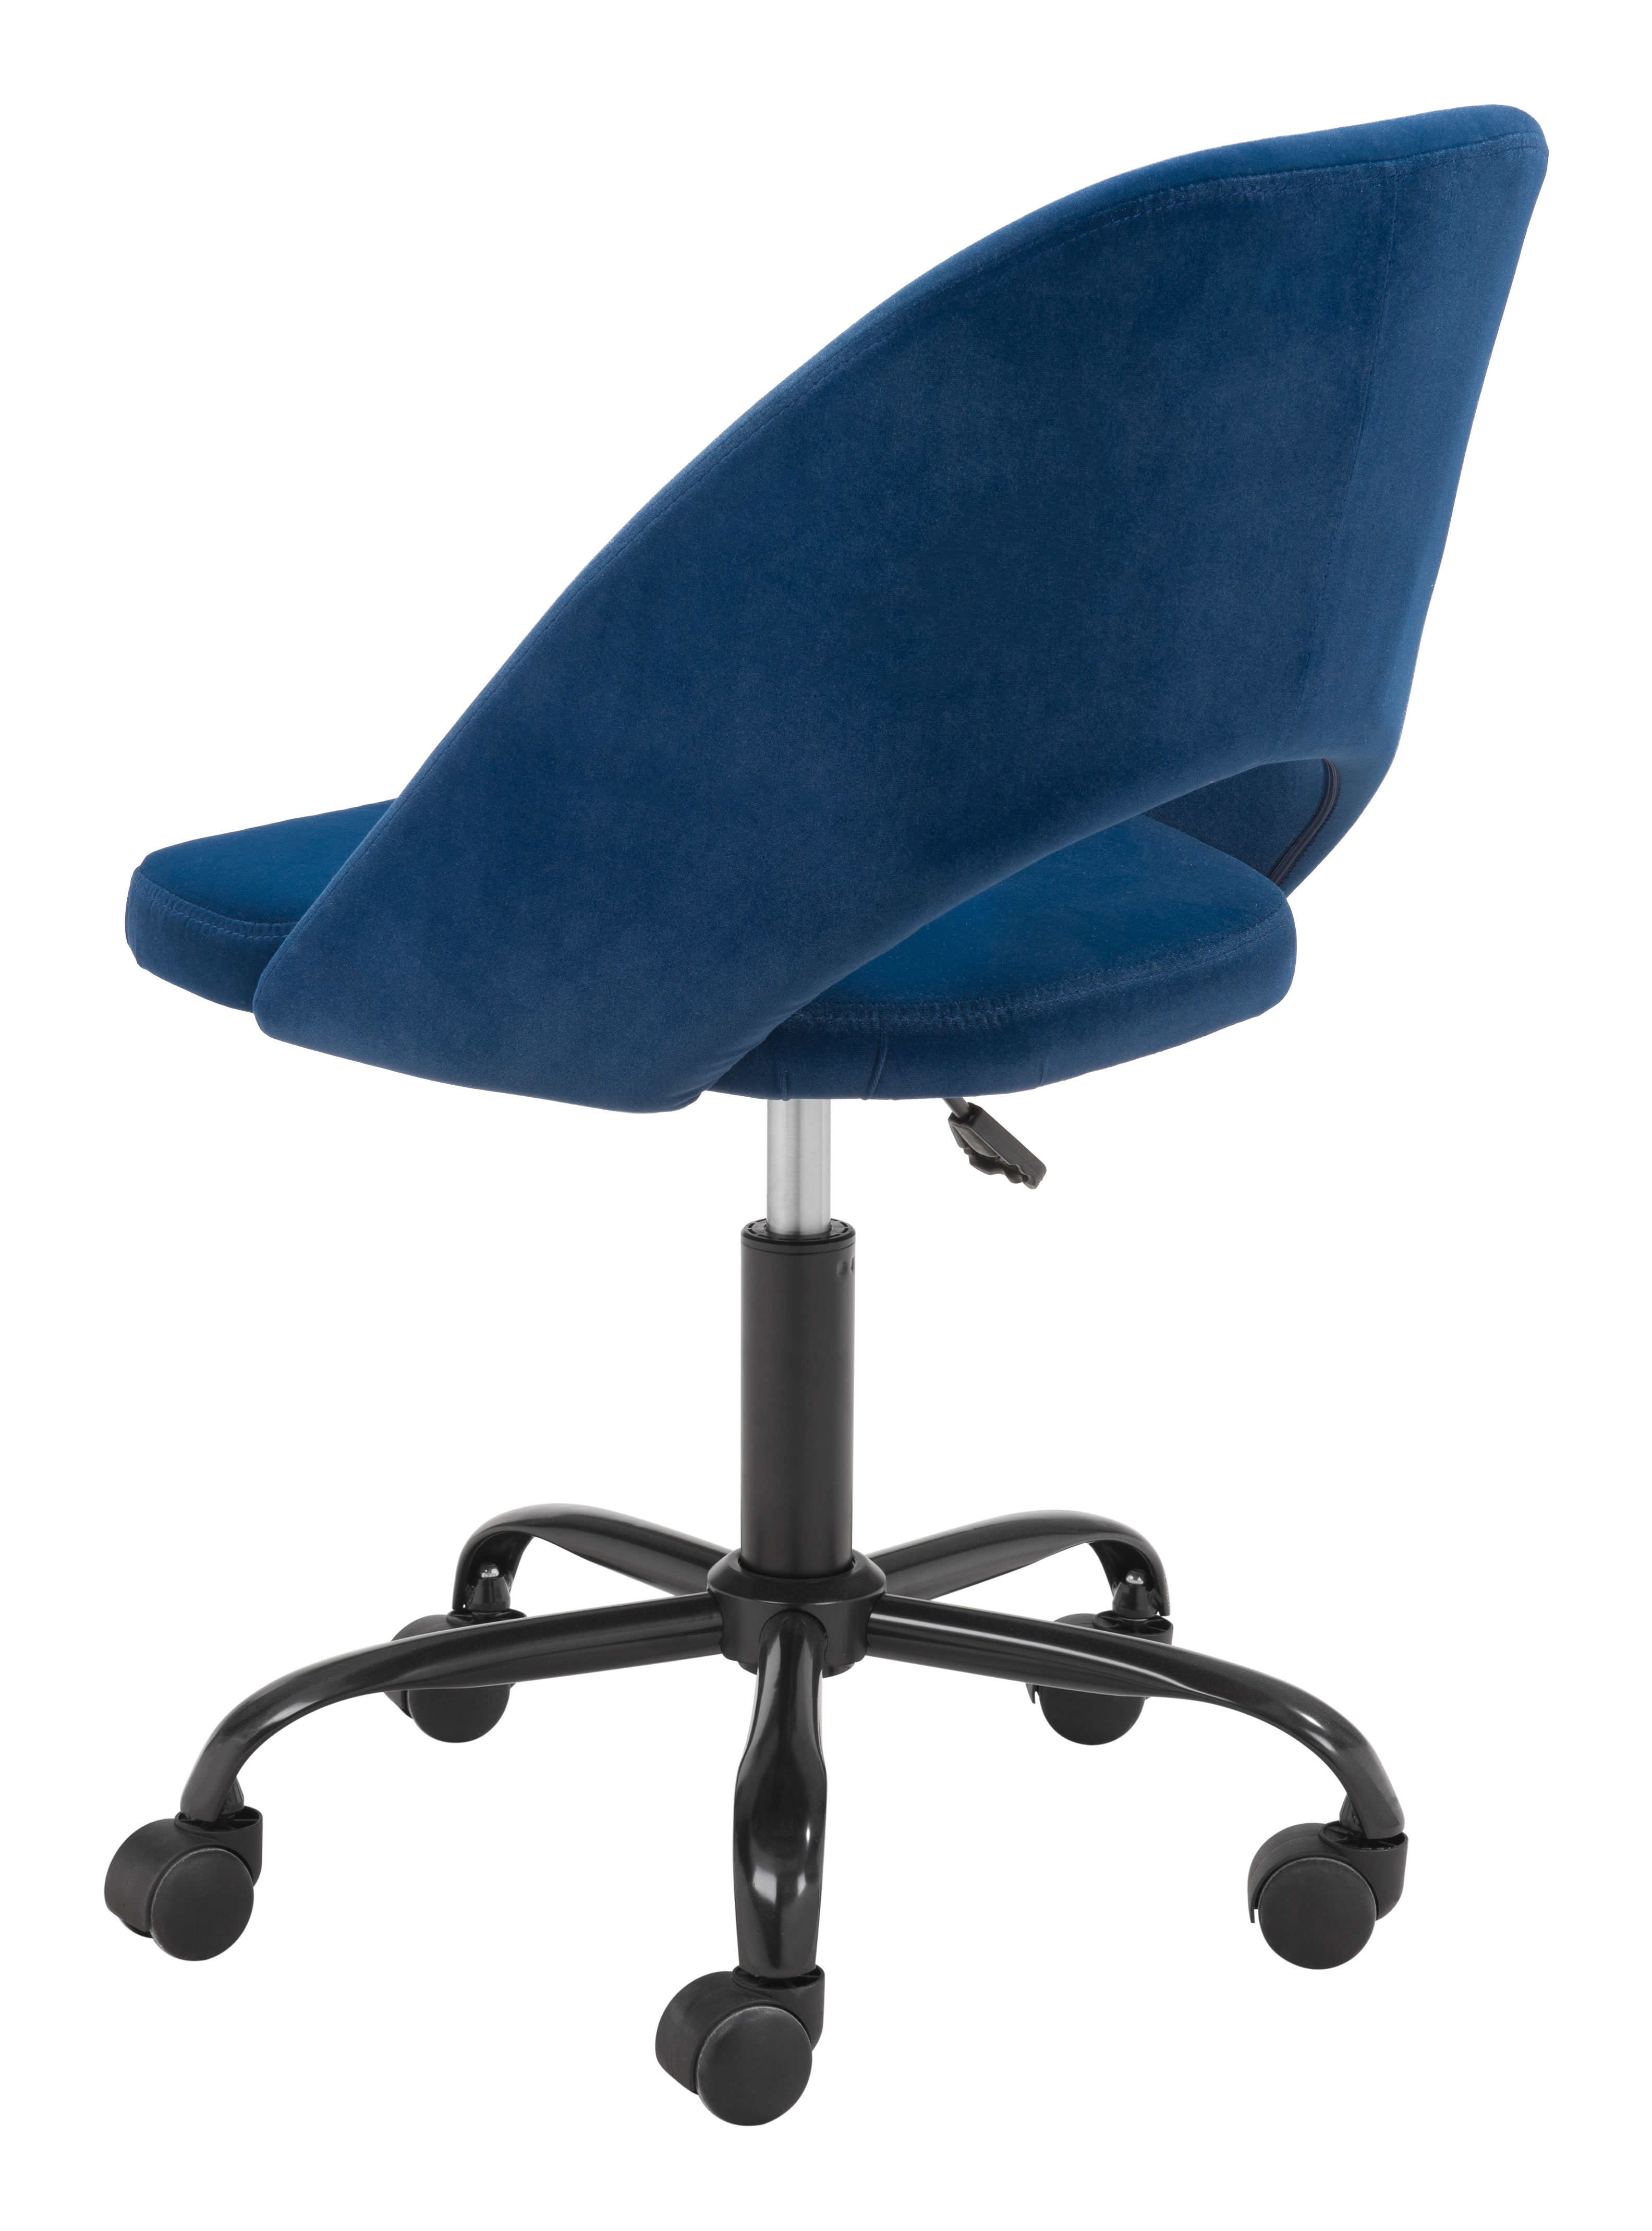 Treibh Office Chair, Navy Blue - Image 3